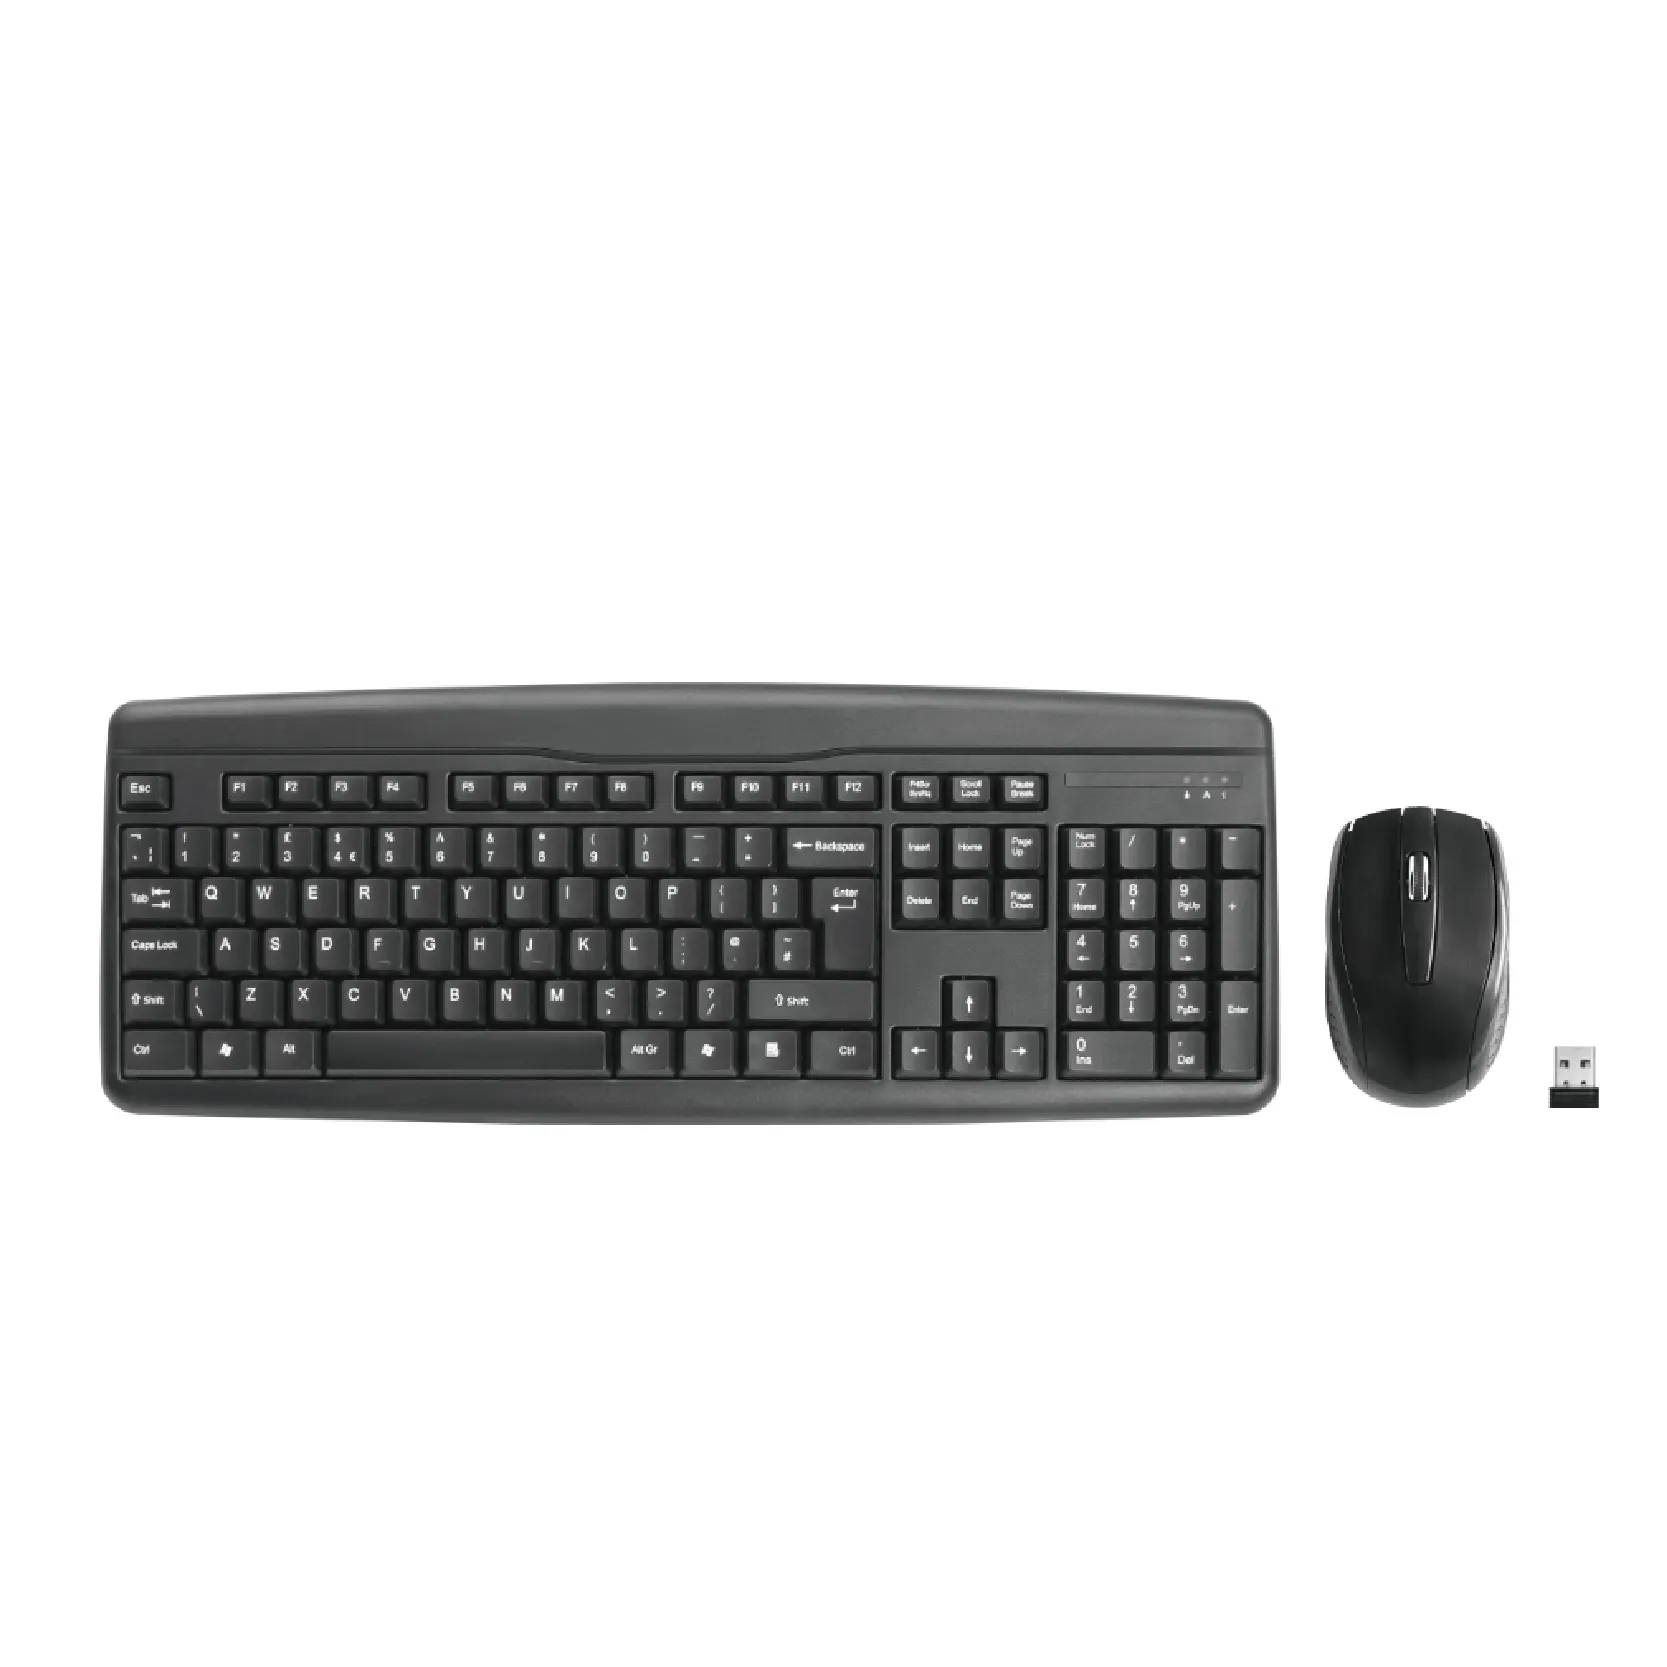 HKM8019 2.4g Mouse Keyboard Set Optical Wireless Keyboard Mouse Sets Combo for Desktop Laptop